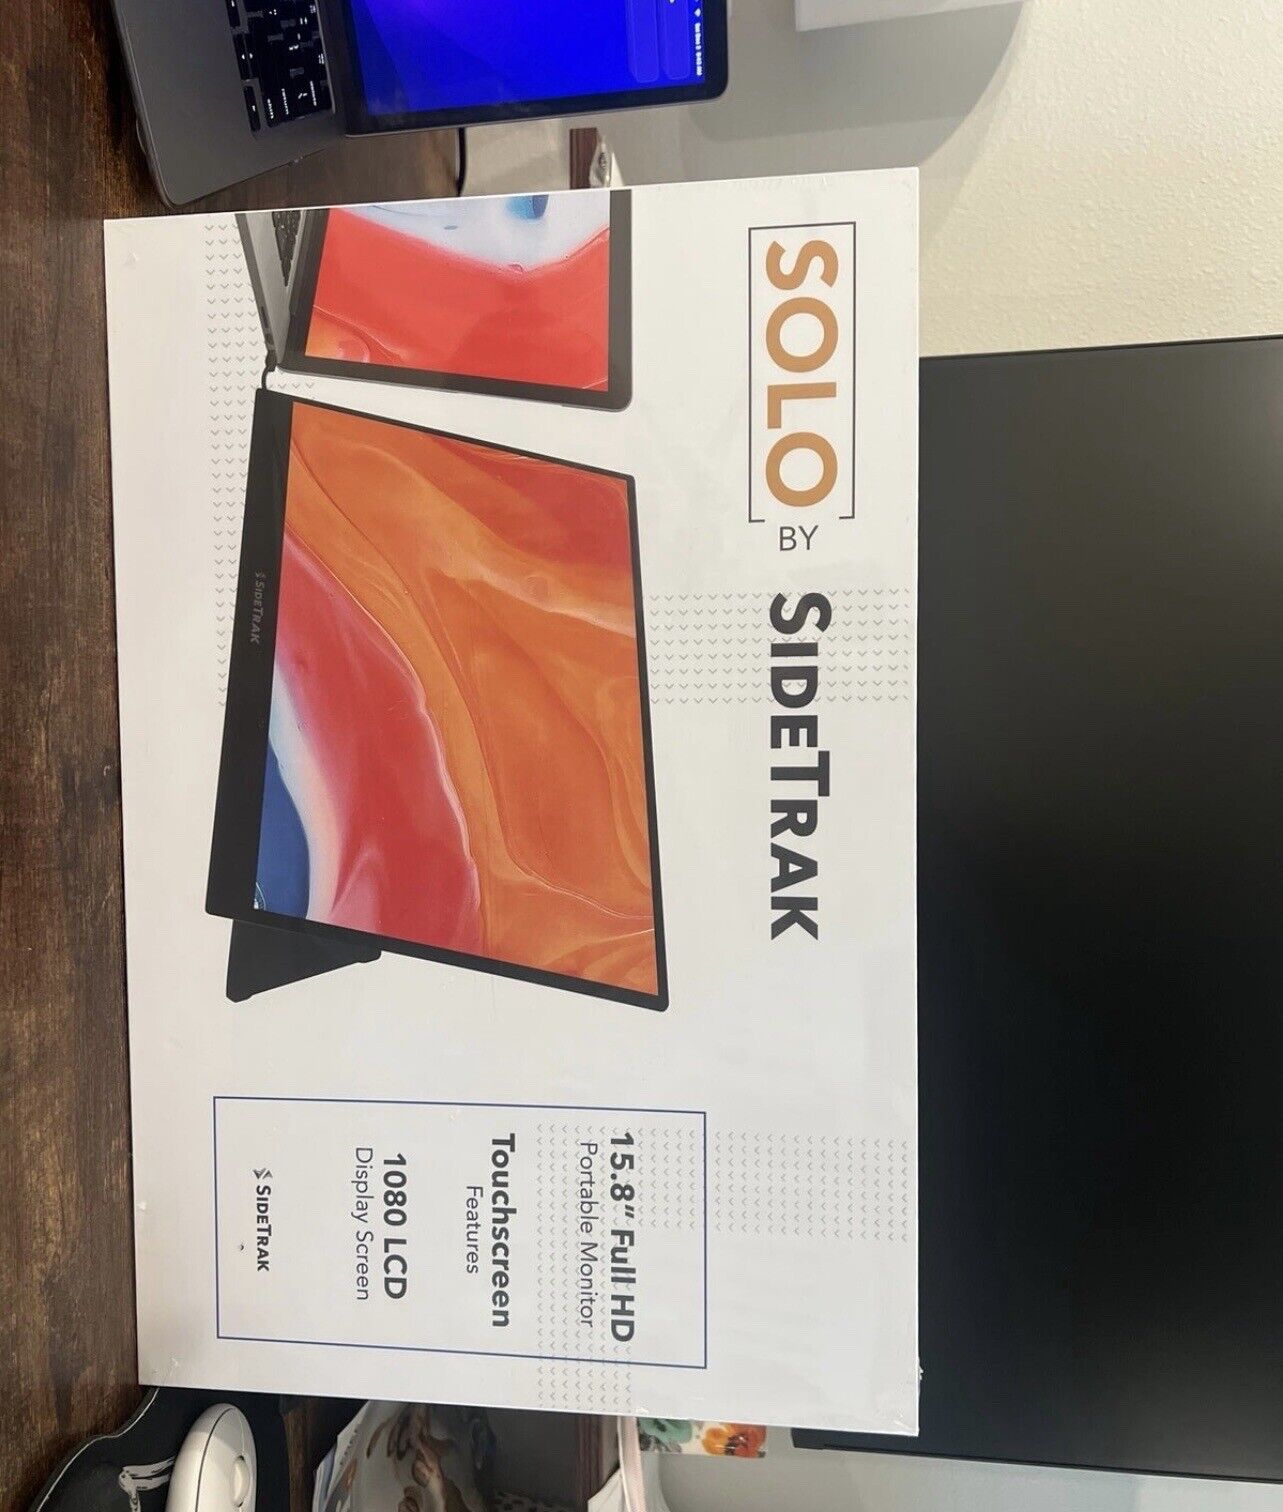 Solo SideTrak Portable Monitor Freestanding 15.8” FHD 1080P LED IPS